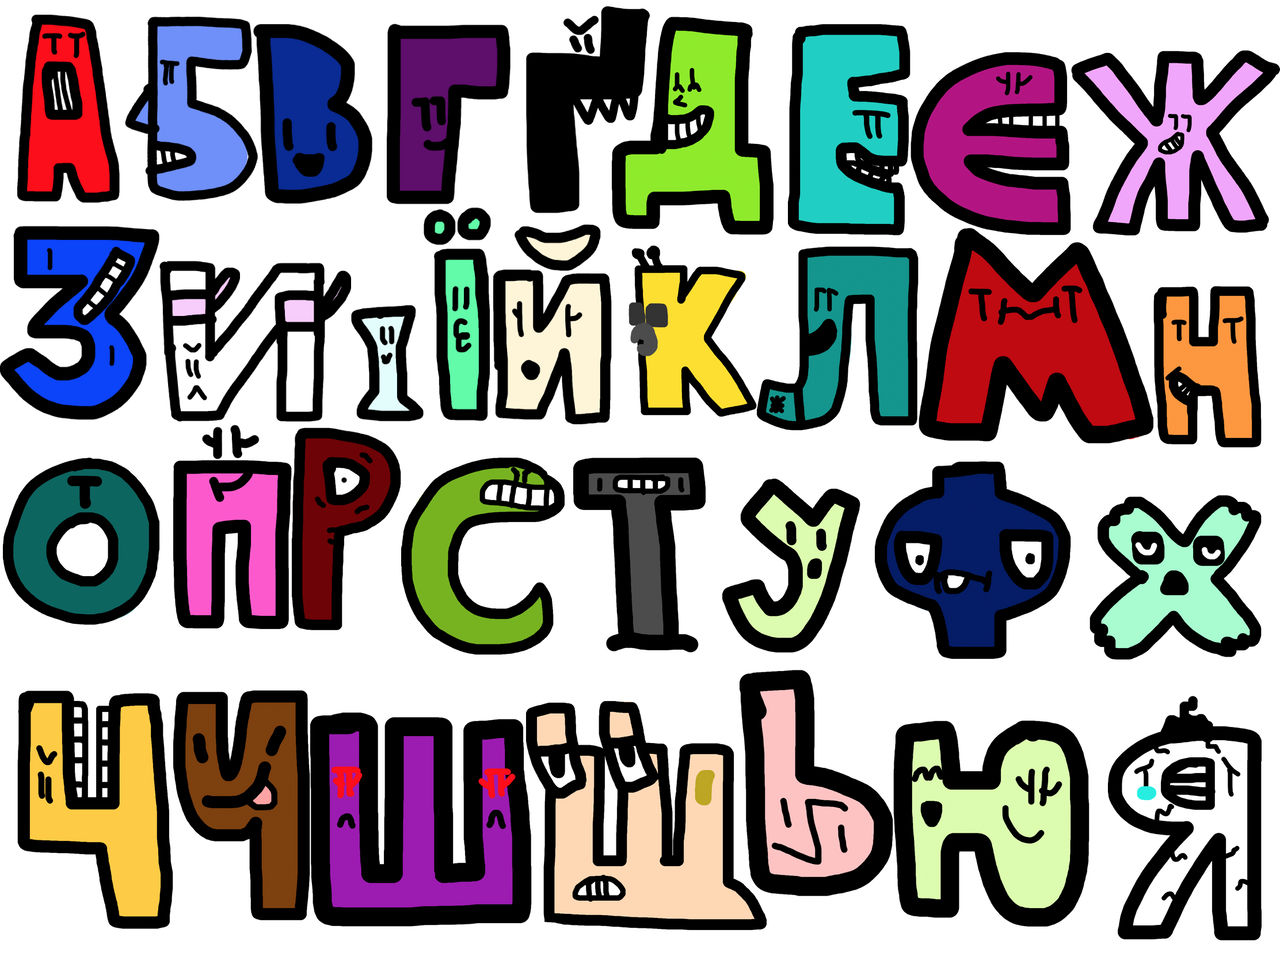 Ukrainian Alphabet Lore by Adam427 on DeviantArt